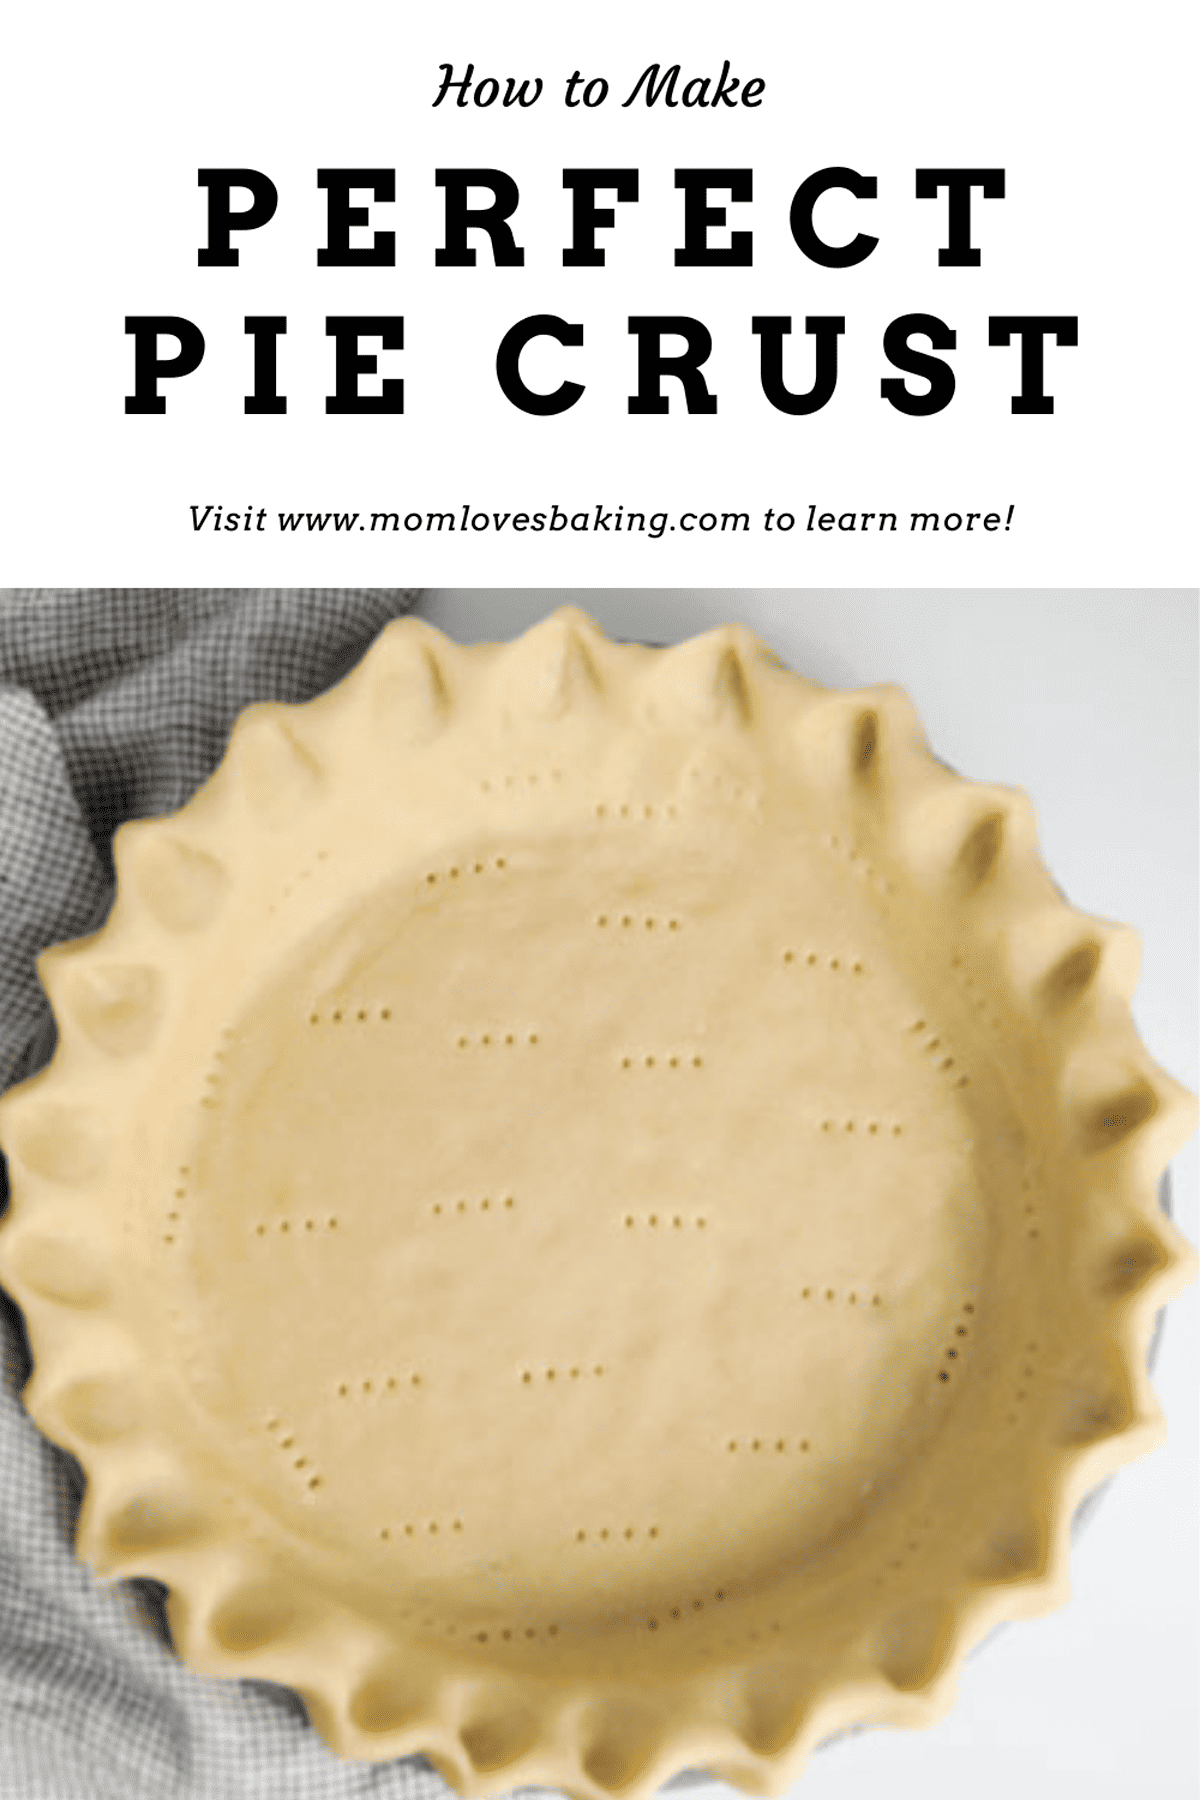 How to make perfect pie crust photo with headline.